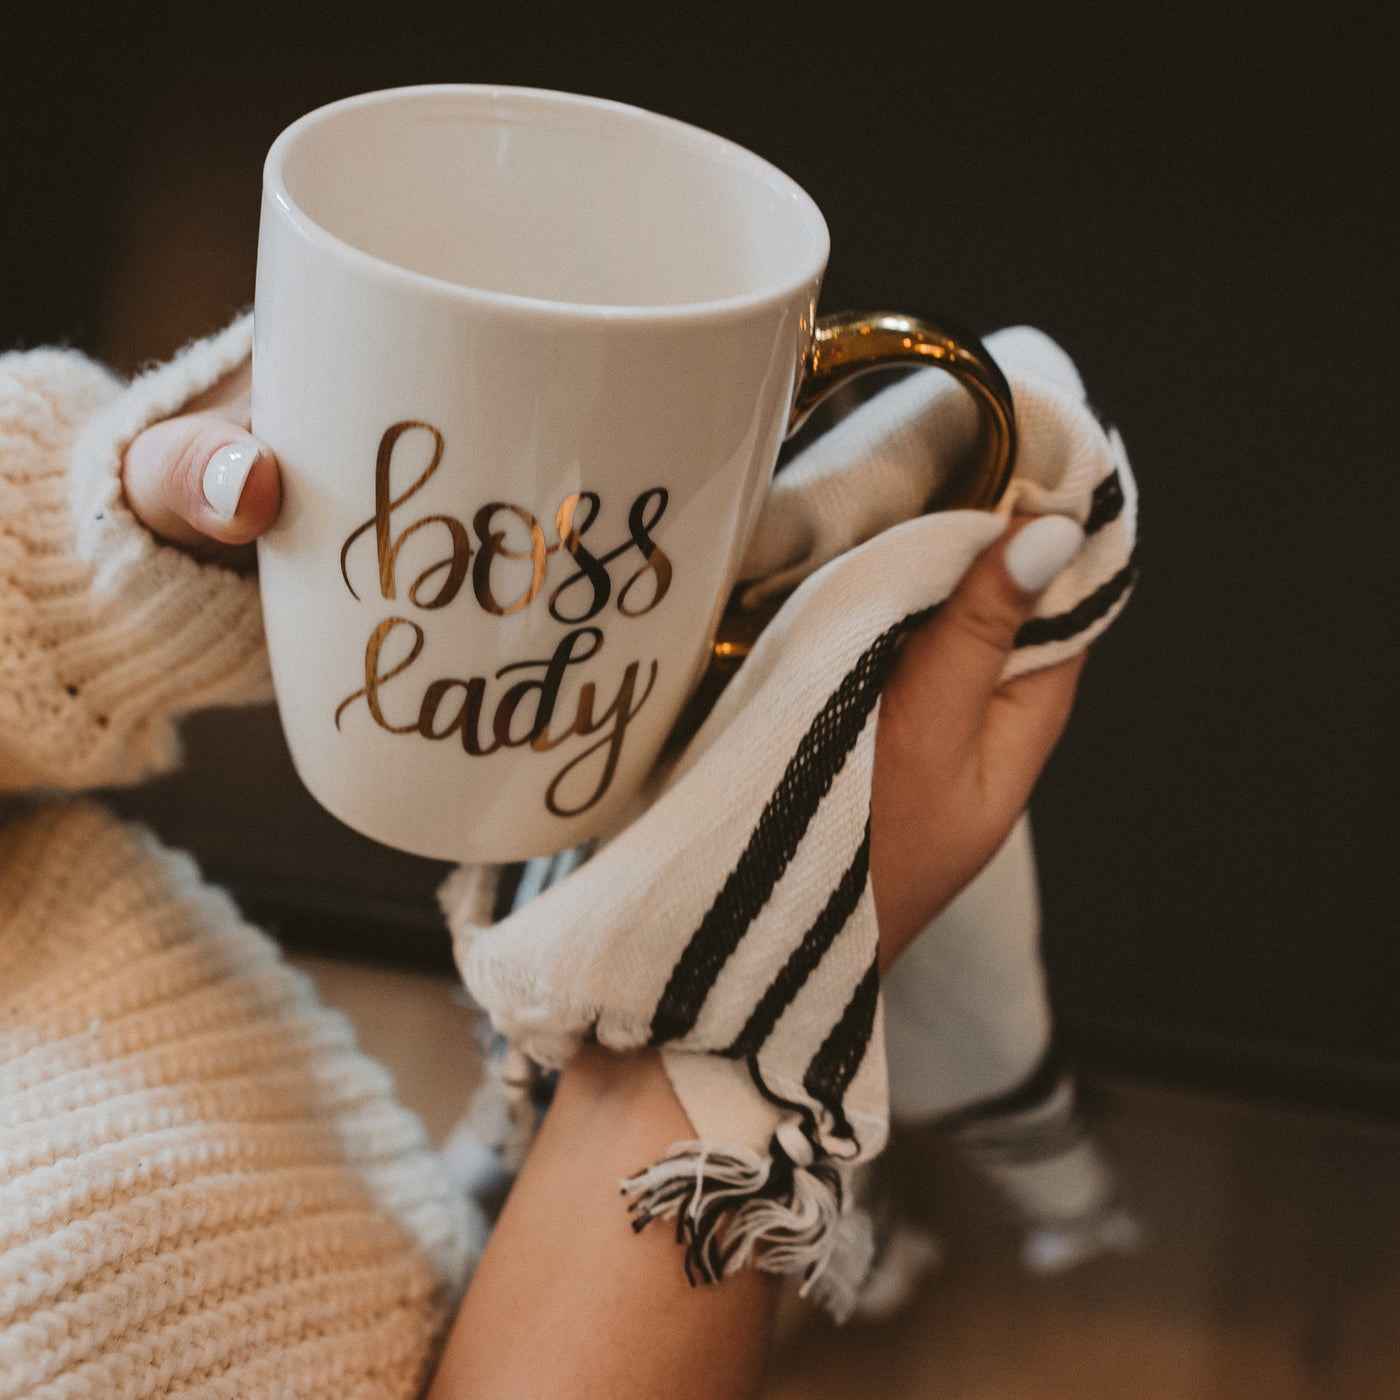 Boss Lady 16oz. Coffee Mug - Sweet Water Decor - Coffee Mugs